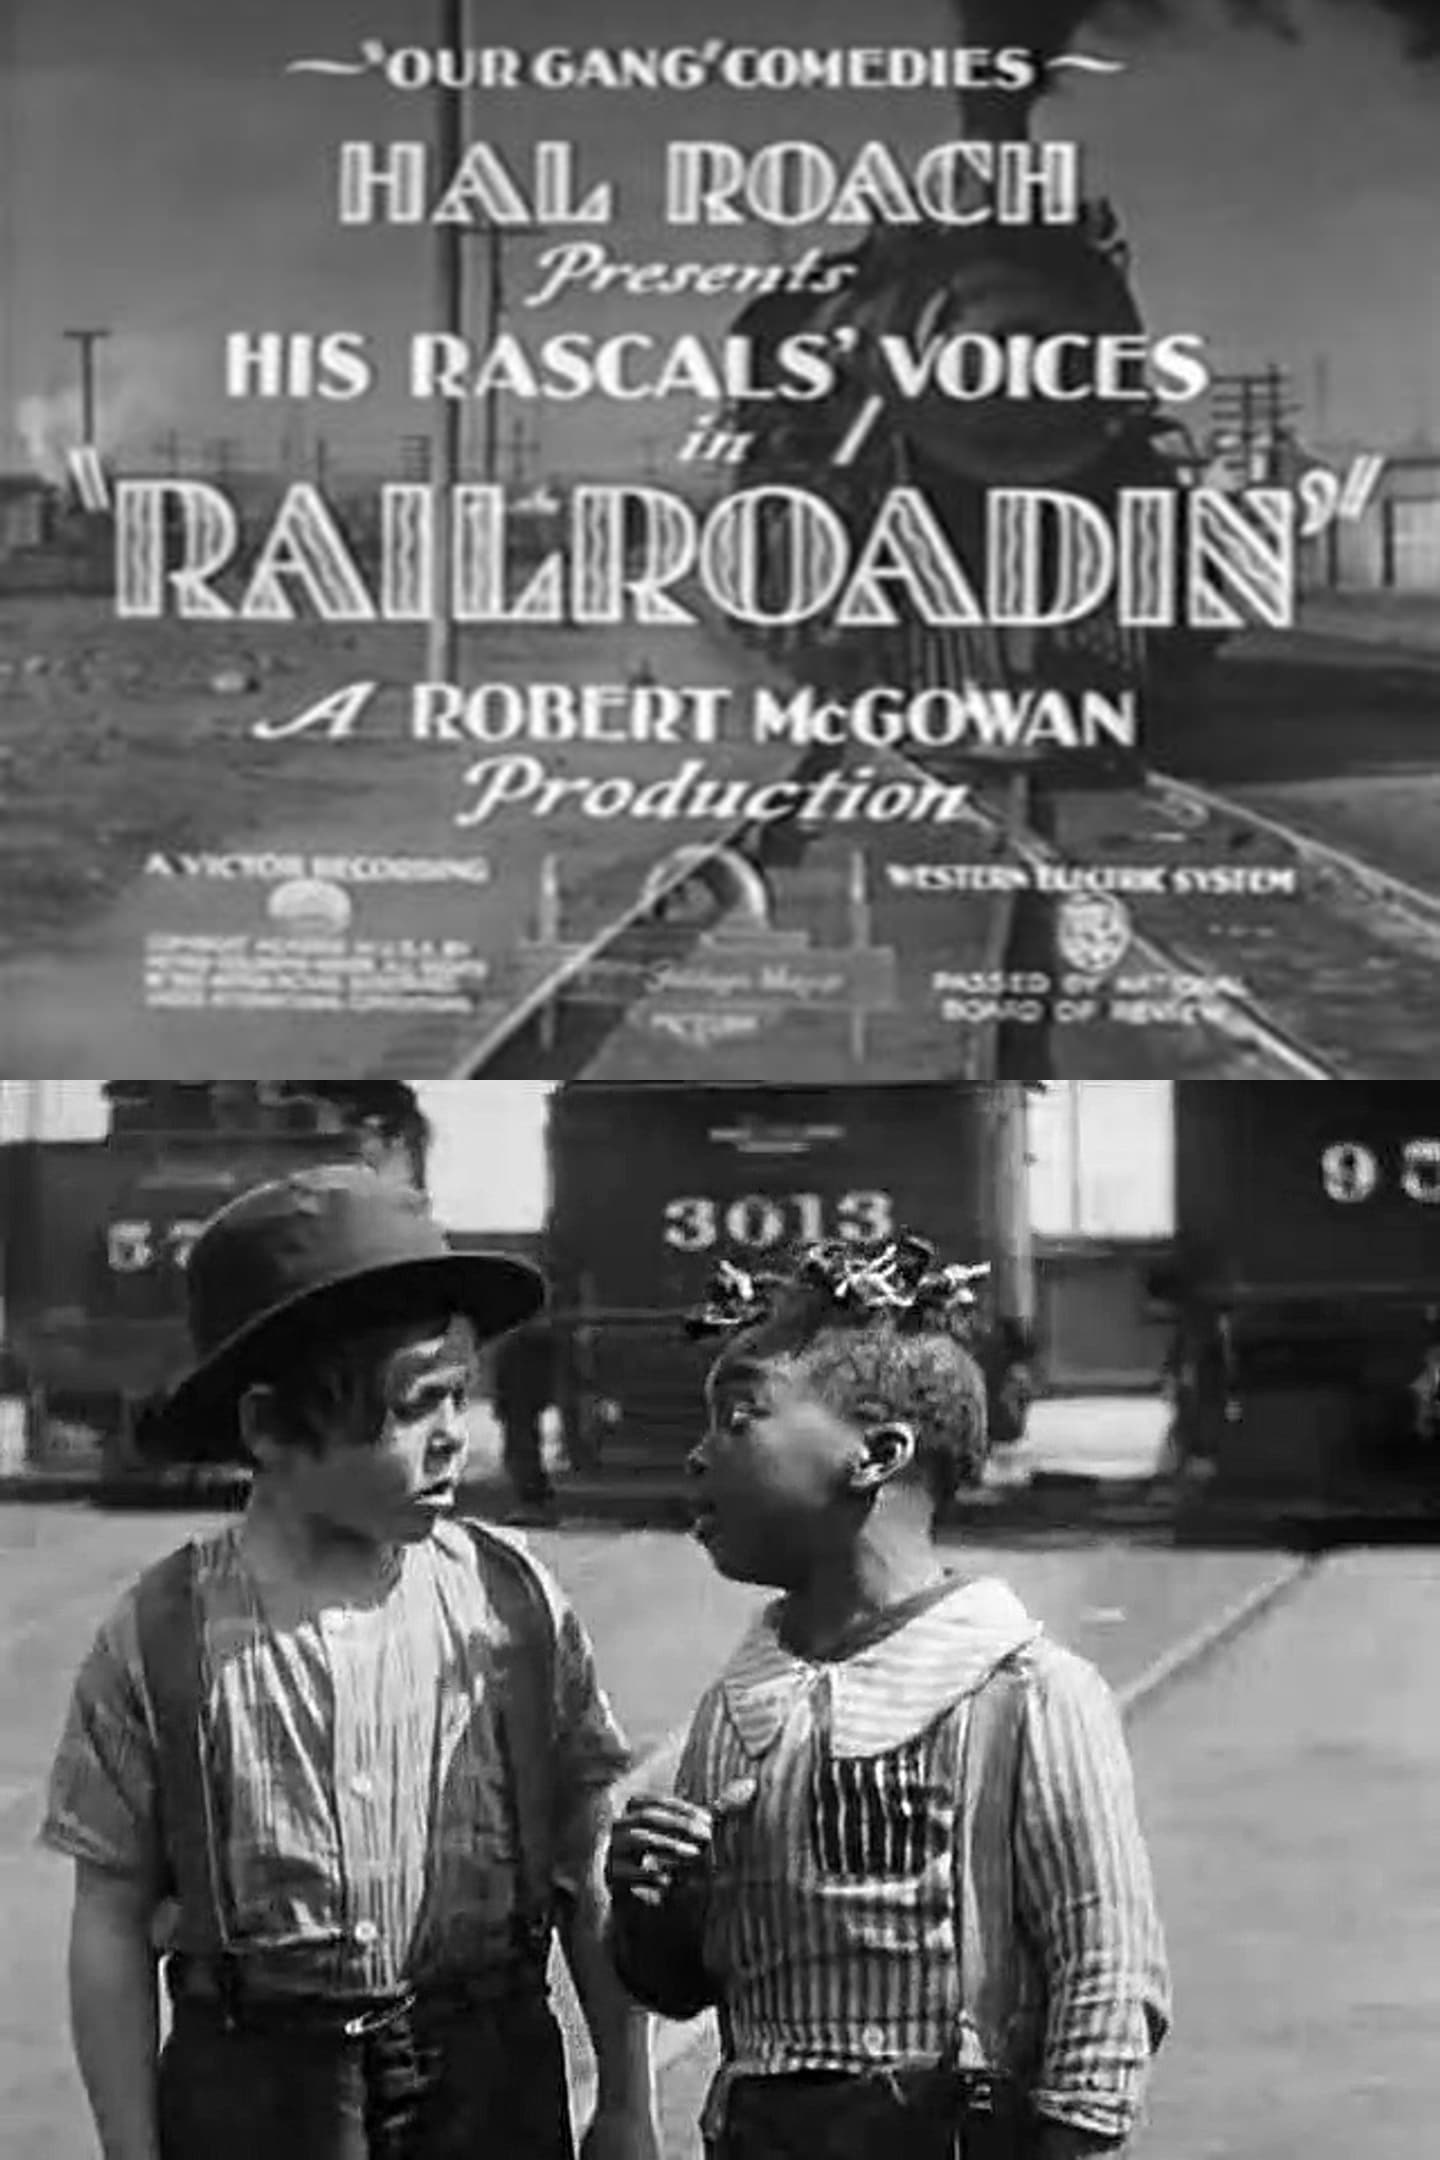 Railroadin'